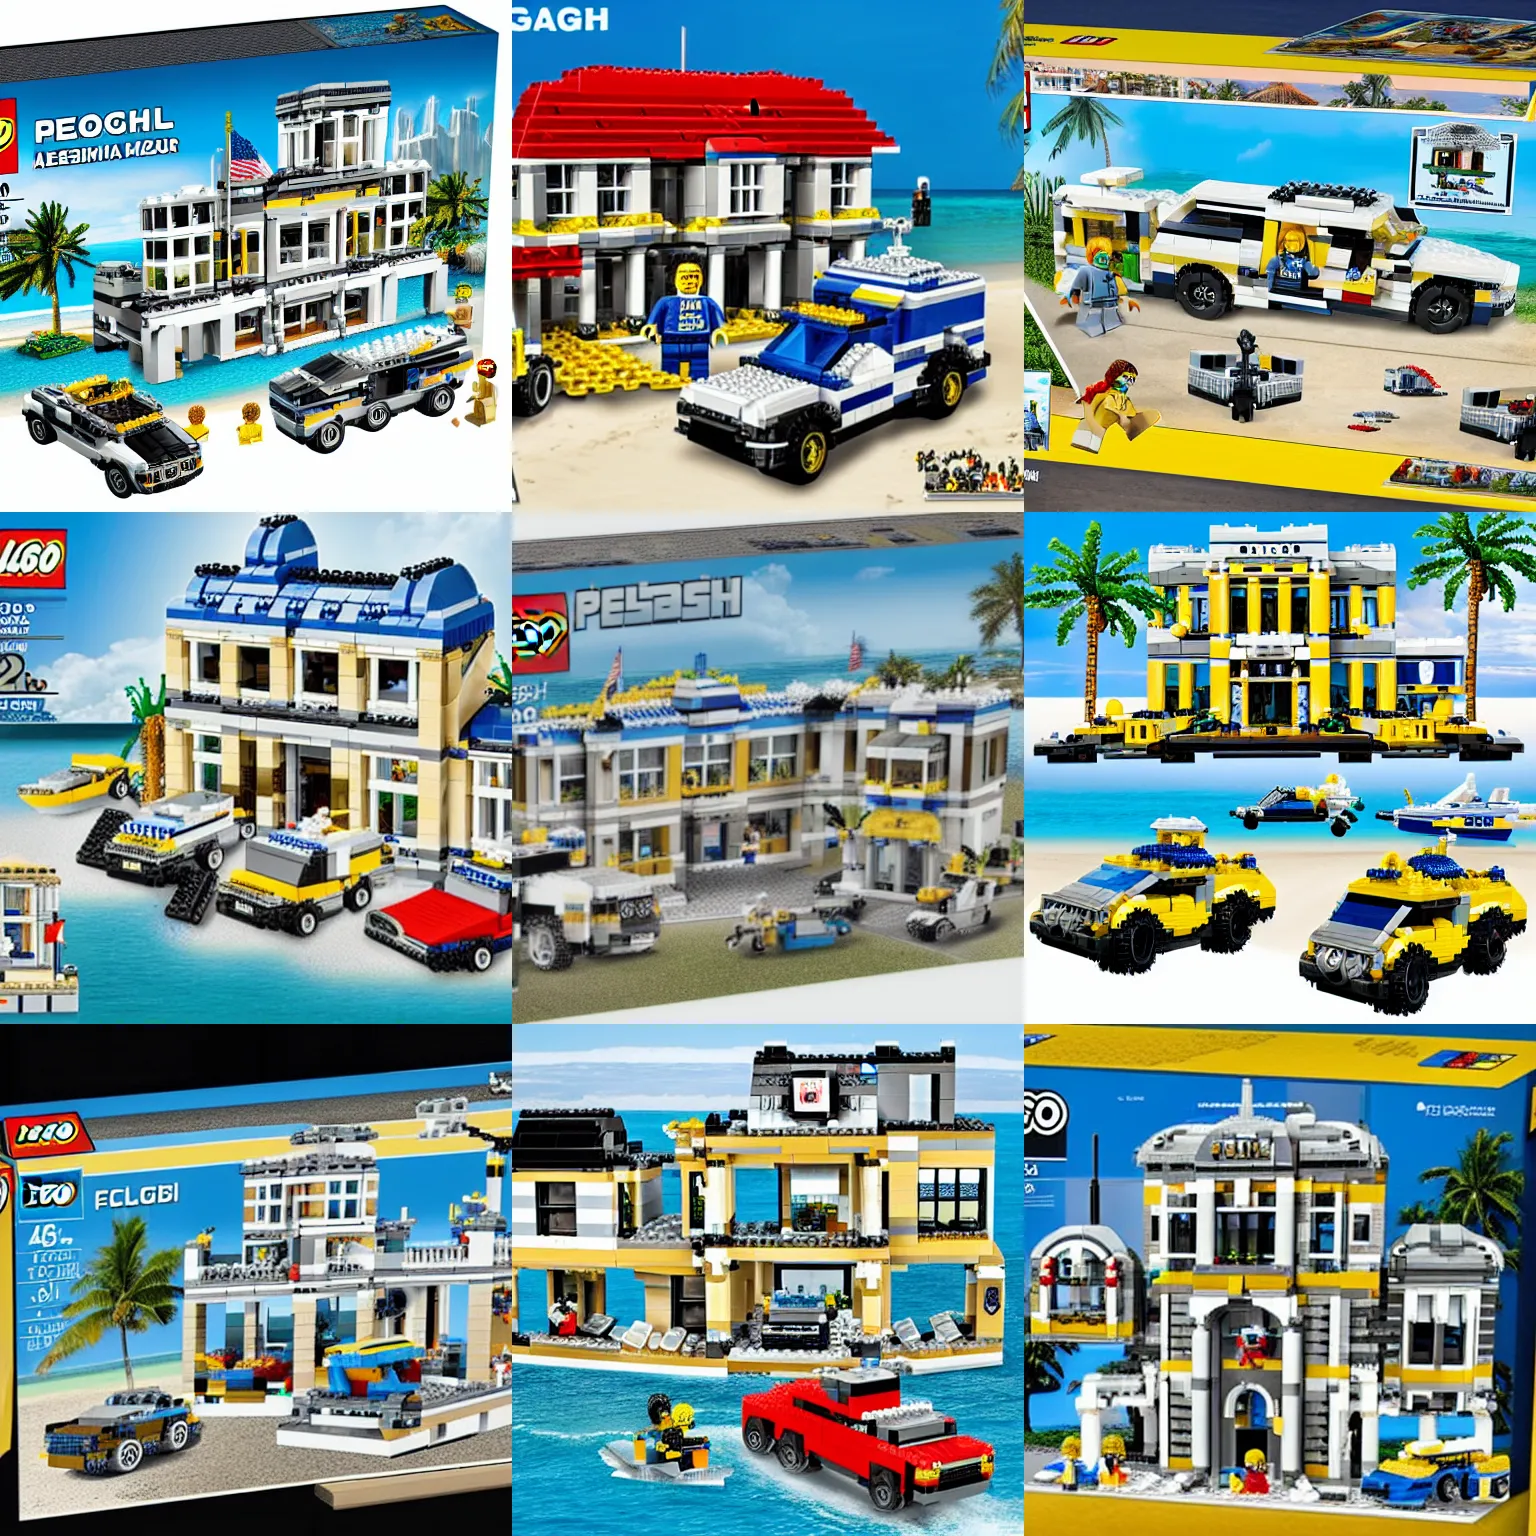 Prompt: mar - a - lago florida mansion beach house fbi police vehicle raid lego set